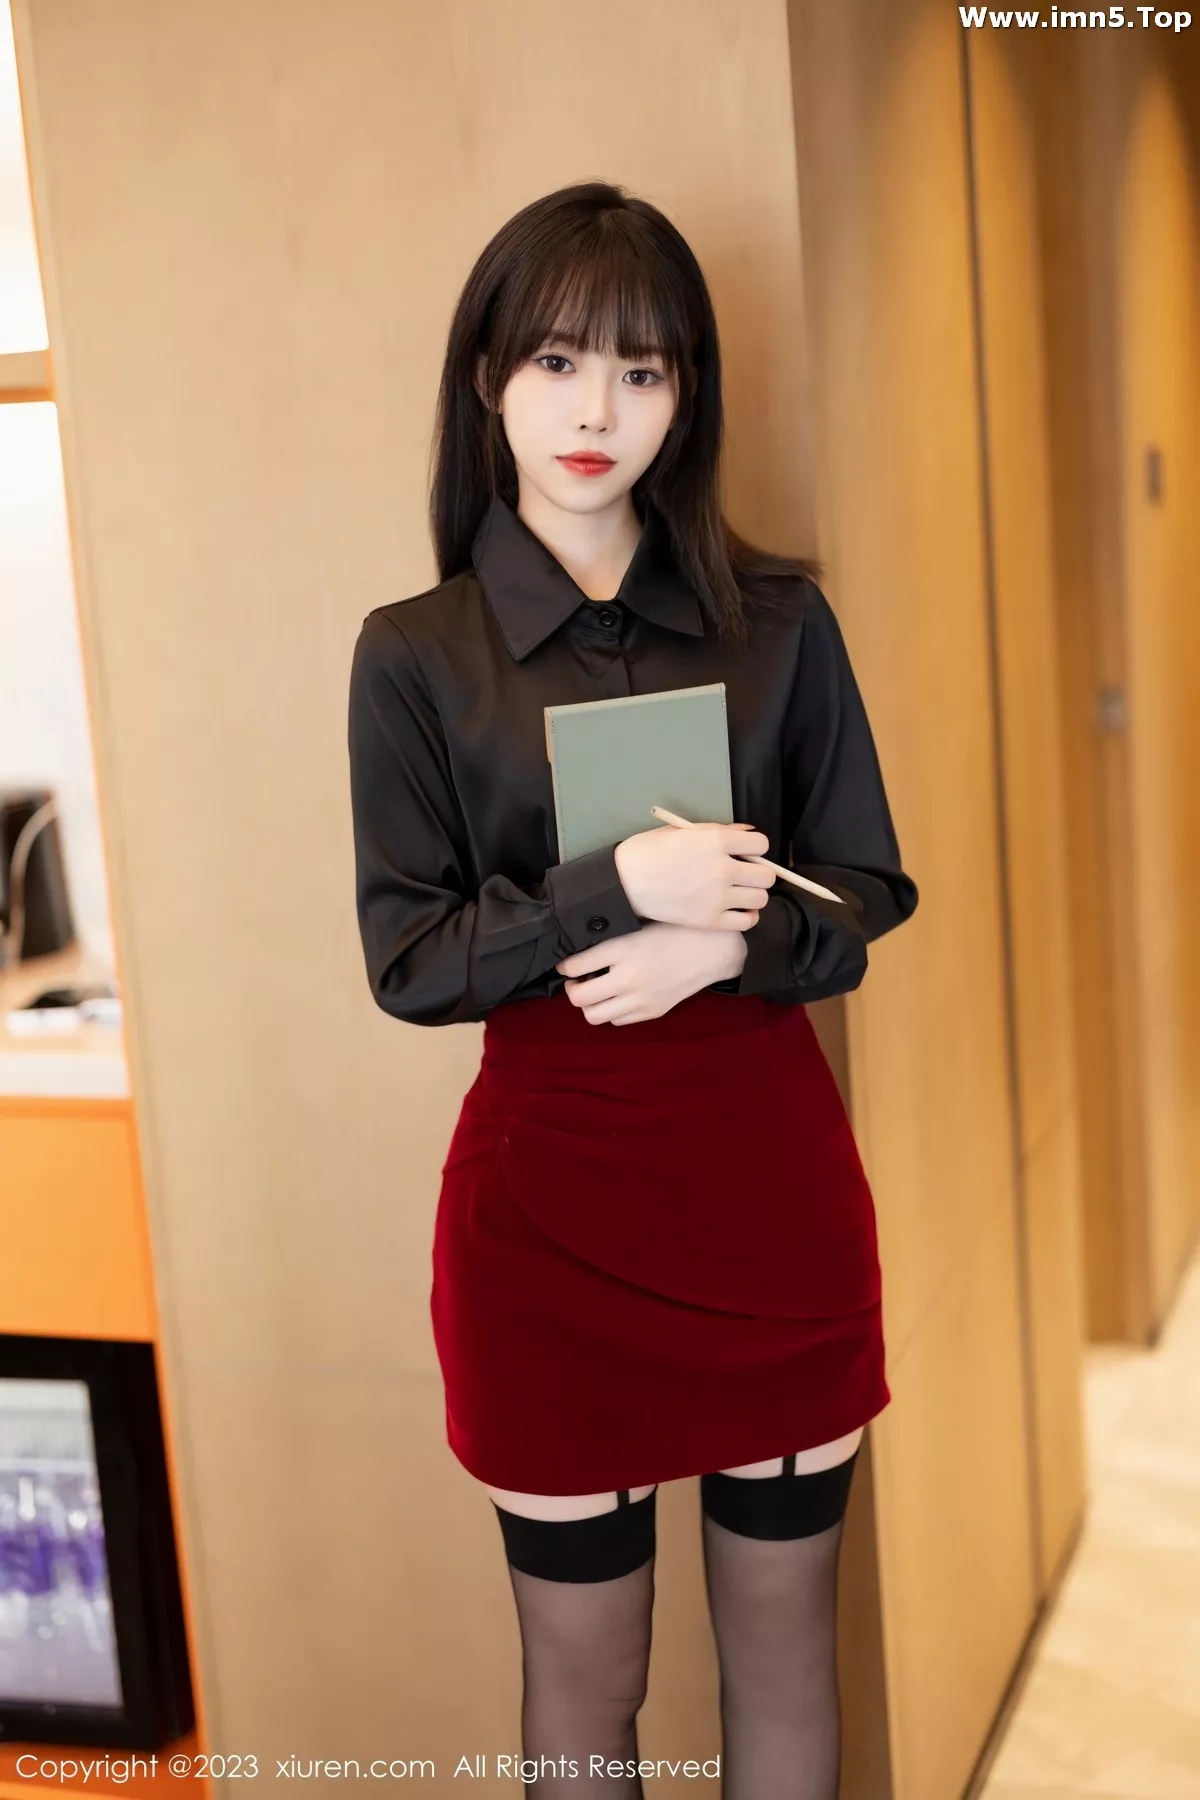 [XiaoYu画语界]Vol.1063_模特奶瓶黑色衬衫配红色短裙露红色蕾丝内衣黑丝吊袜魅惑写真81P